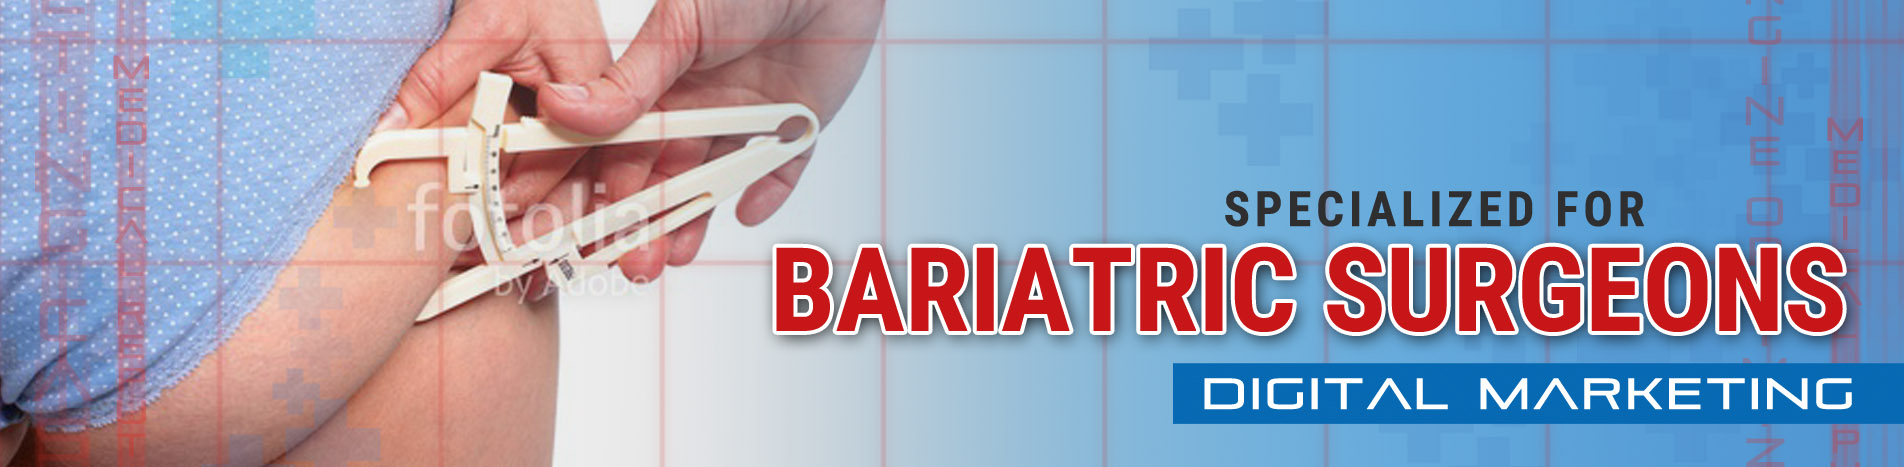 Bariatric Surgery Marketing